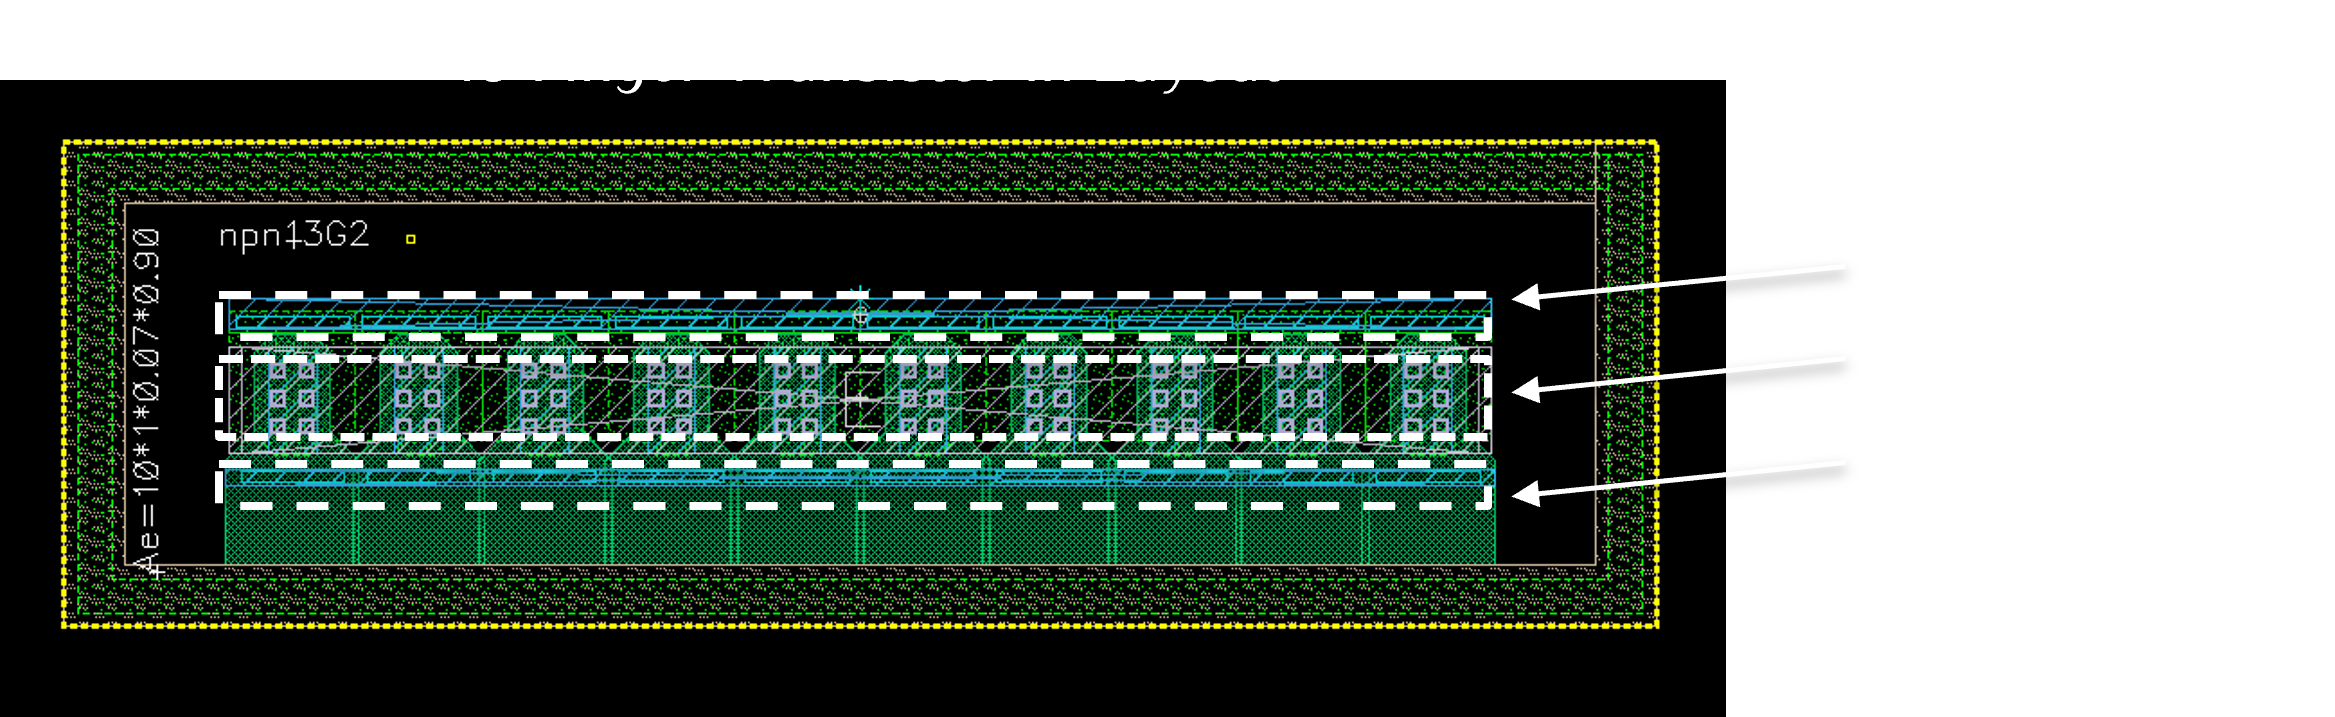 transistor layout